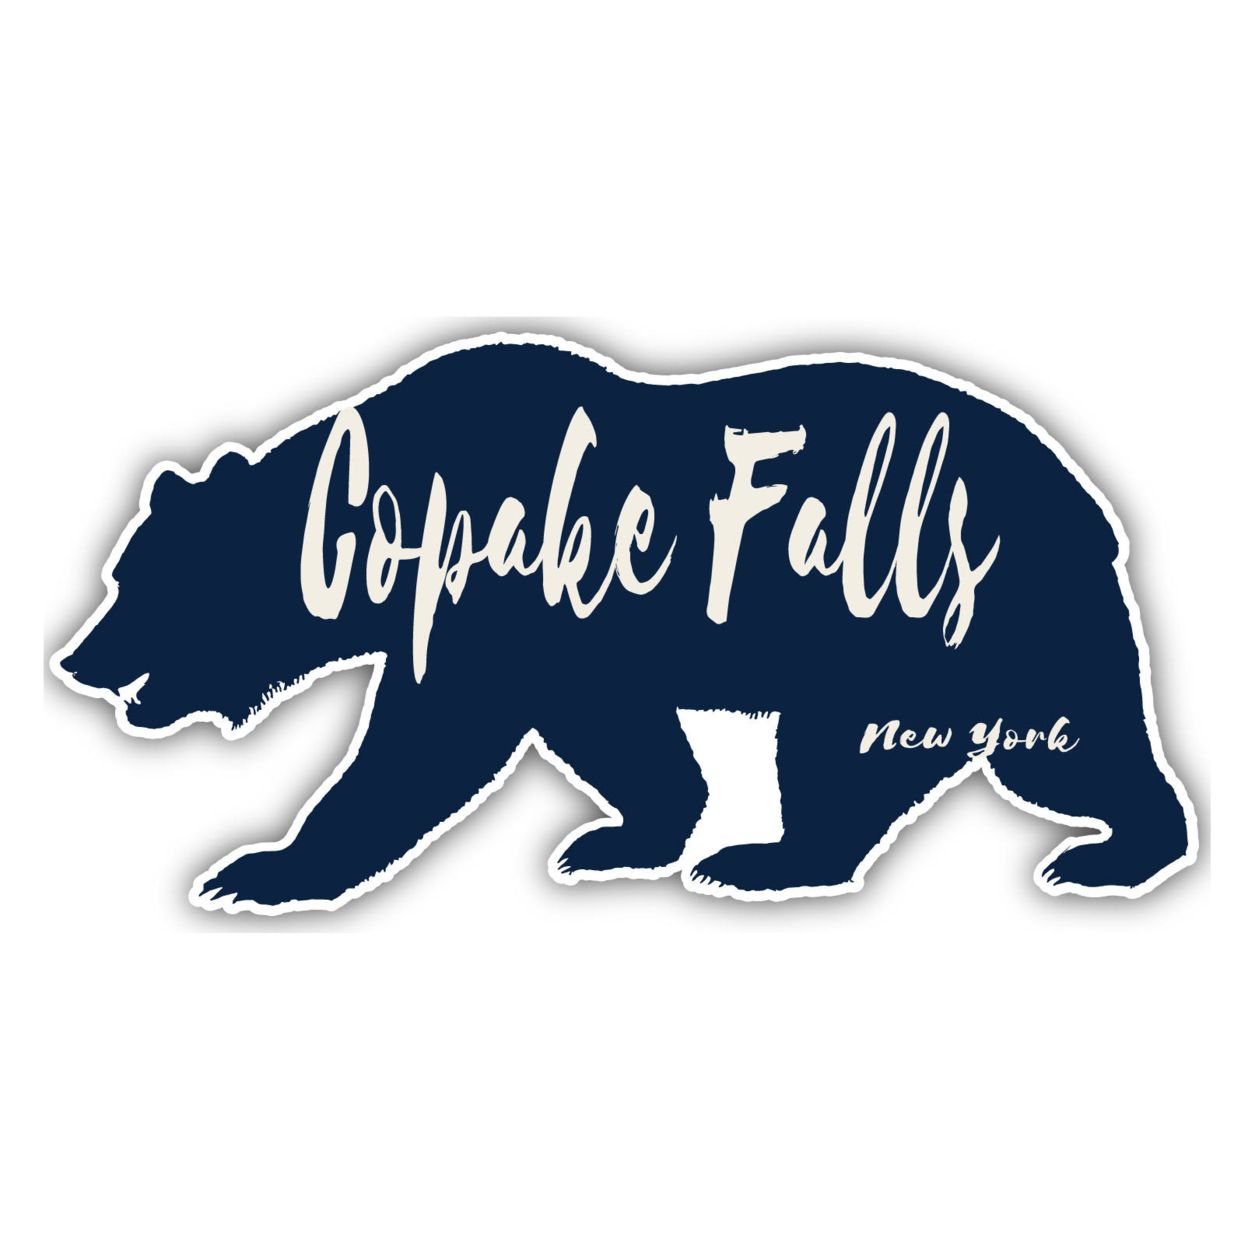 Copake Falls New York Souvenir Decorative Stickers (Choose Theme And Size) - Single Unit, 4-Inch, Bear